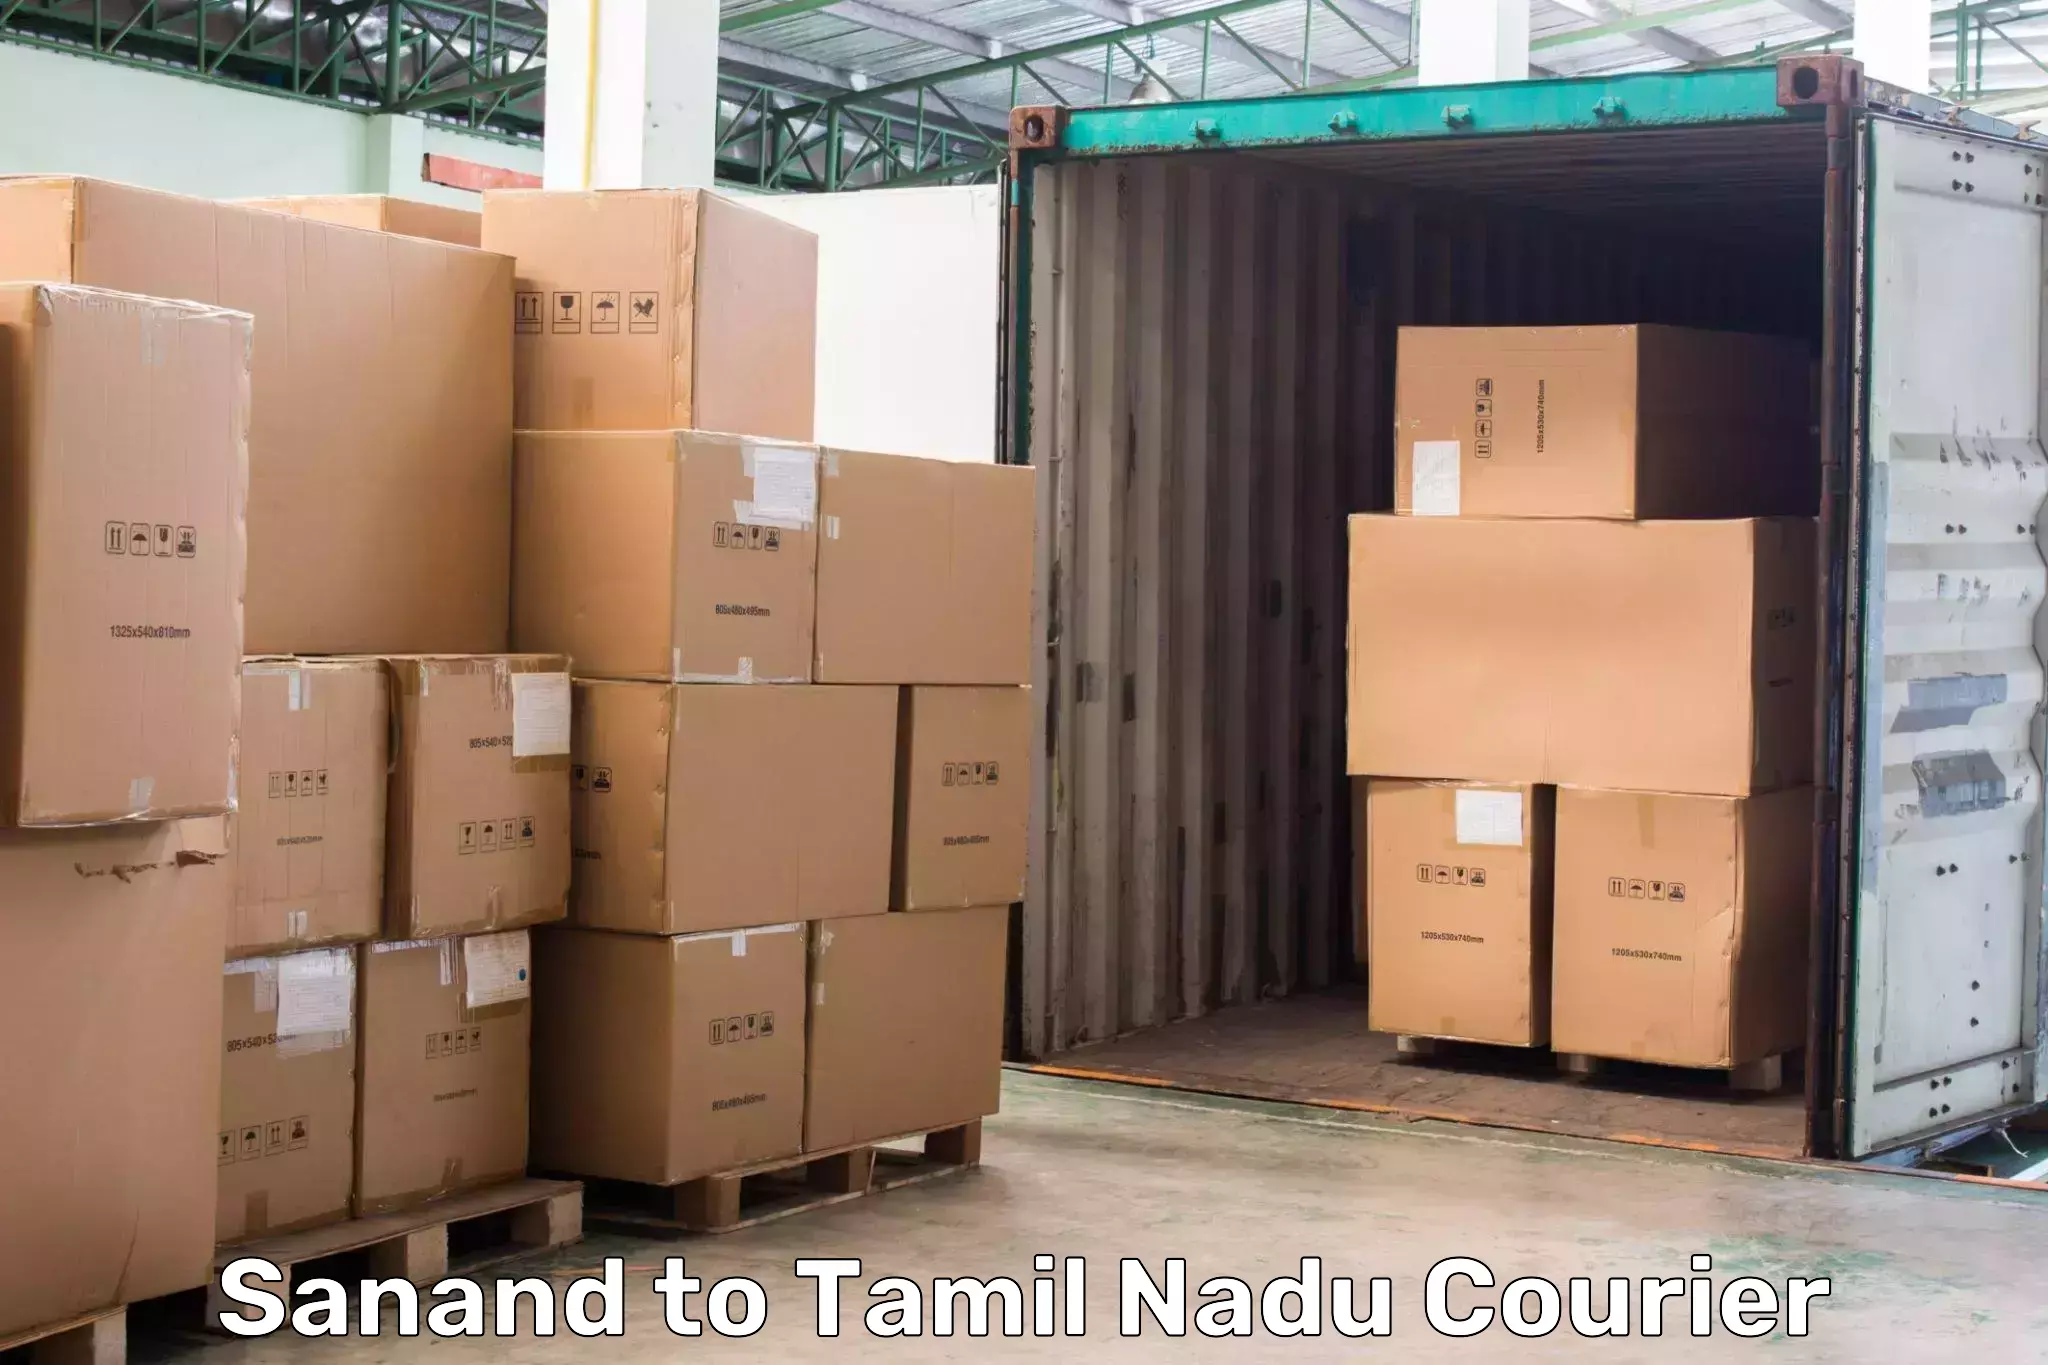 Logistics service provider Sanand to Tamil Nadu